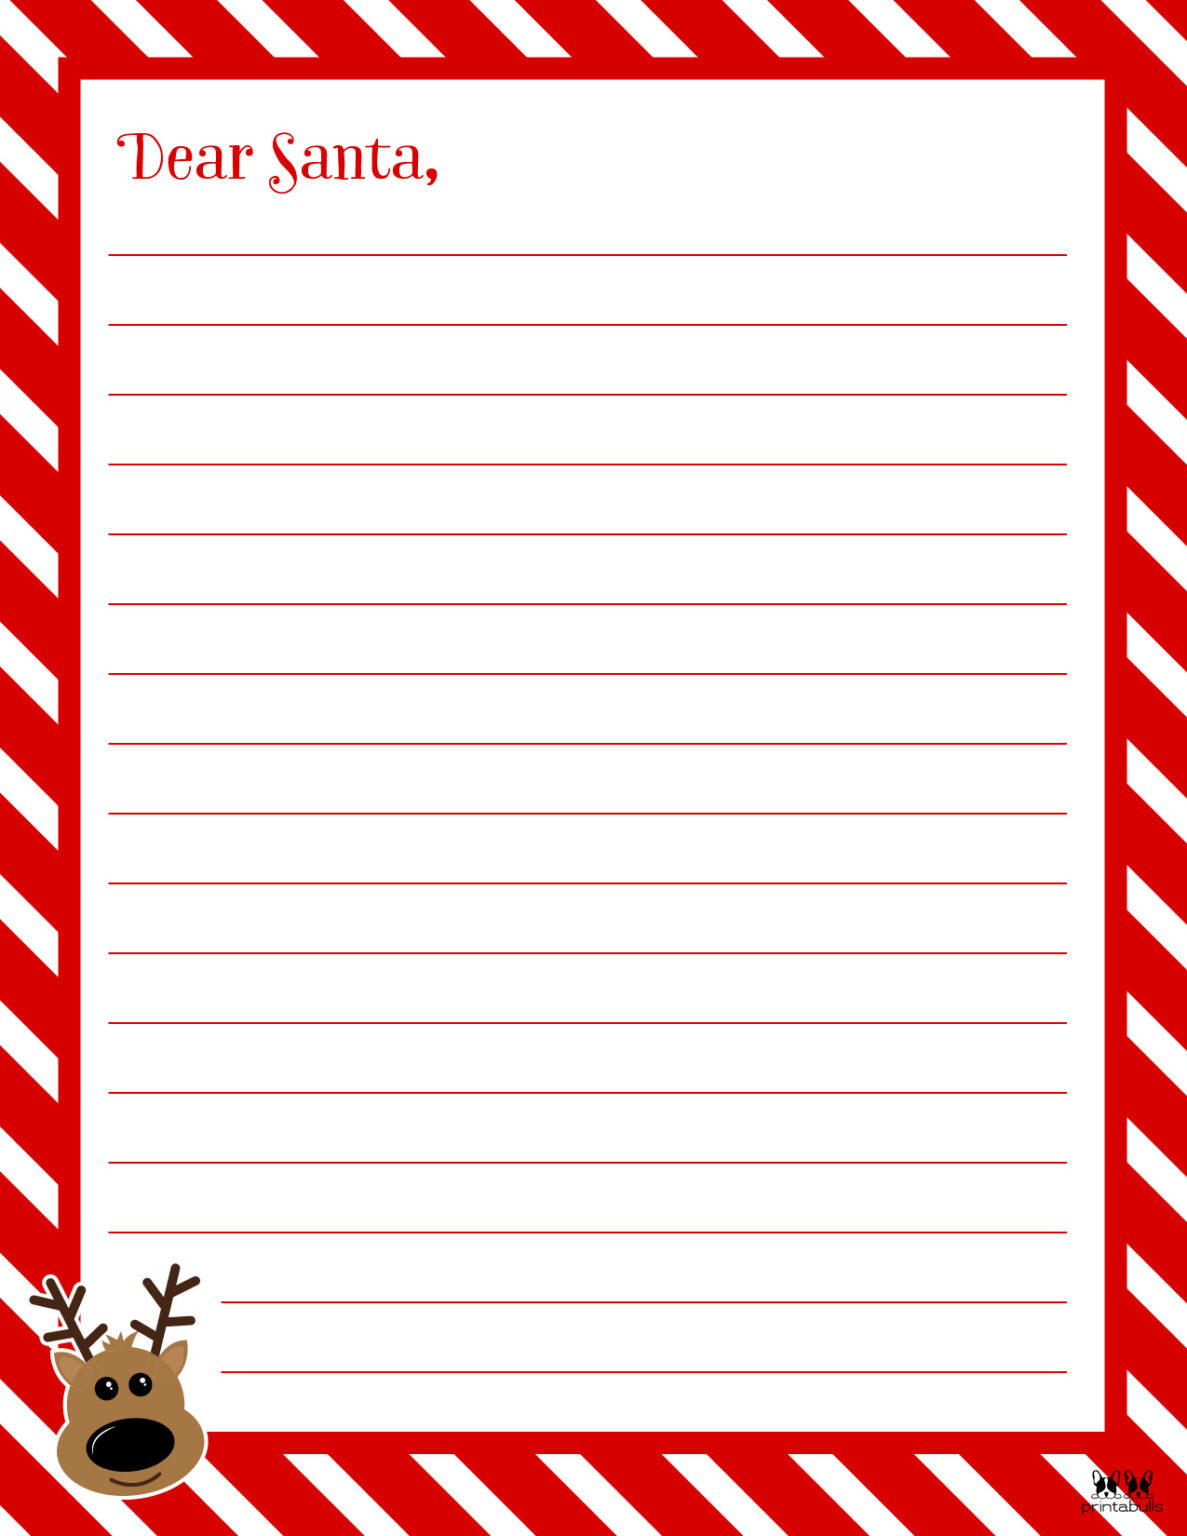 Dear Santa Letter Printables - Free 